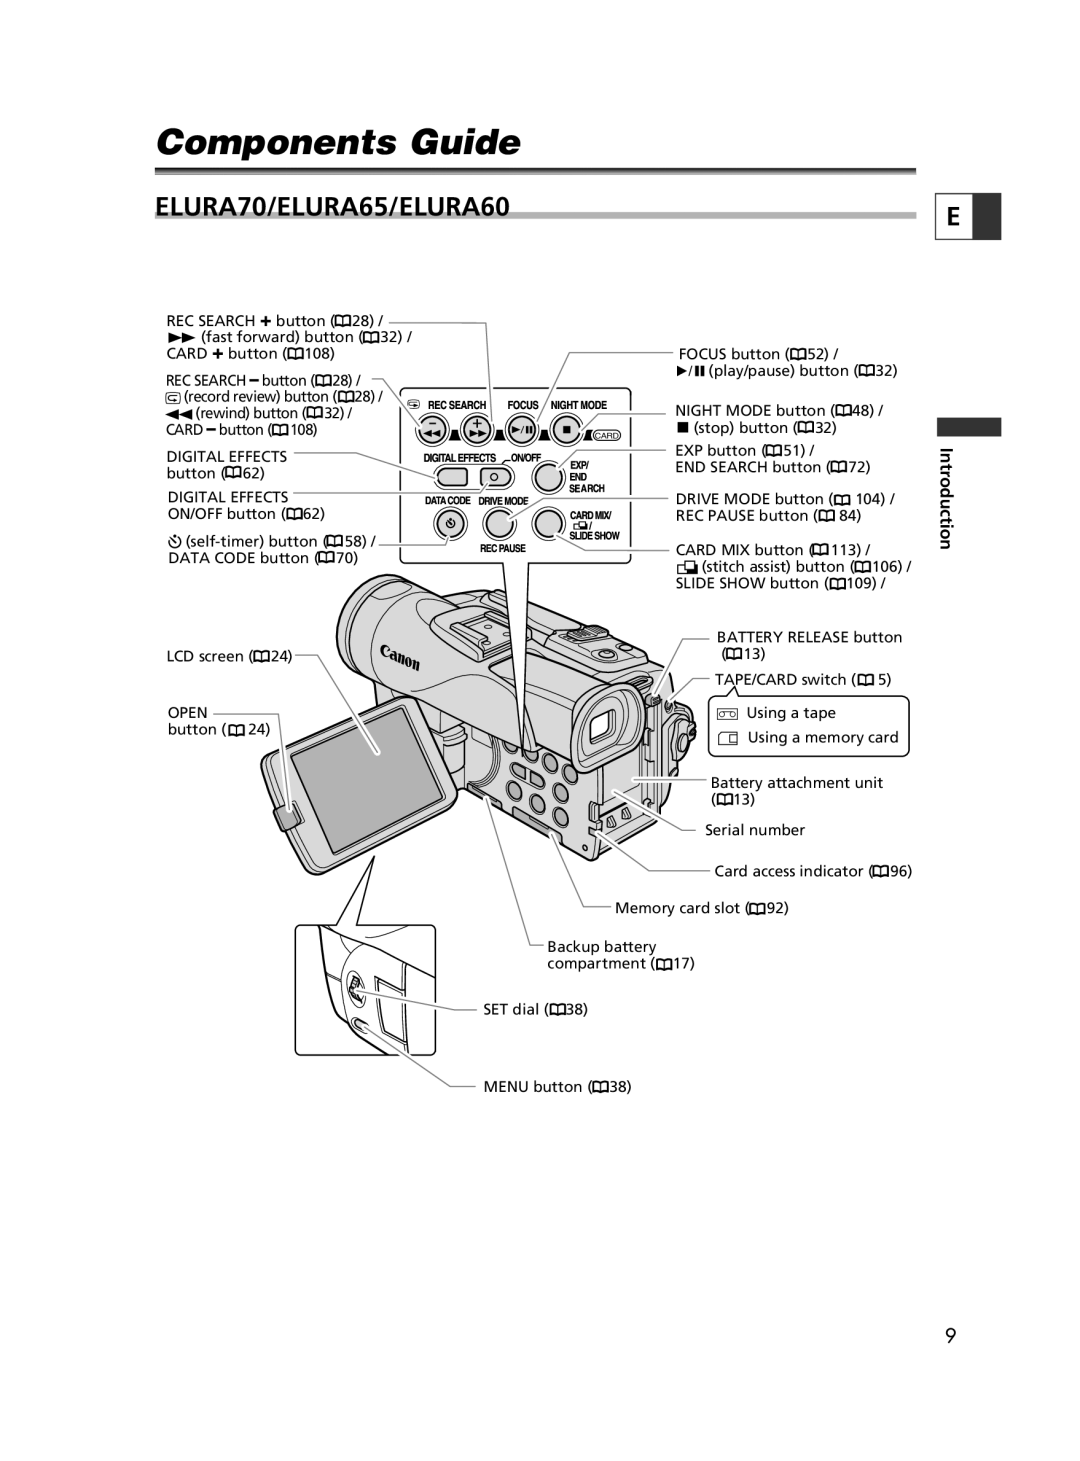 Canon instruction manual Components Guide, ELURA70/ELURA65/ELURA60 